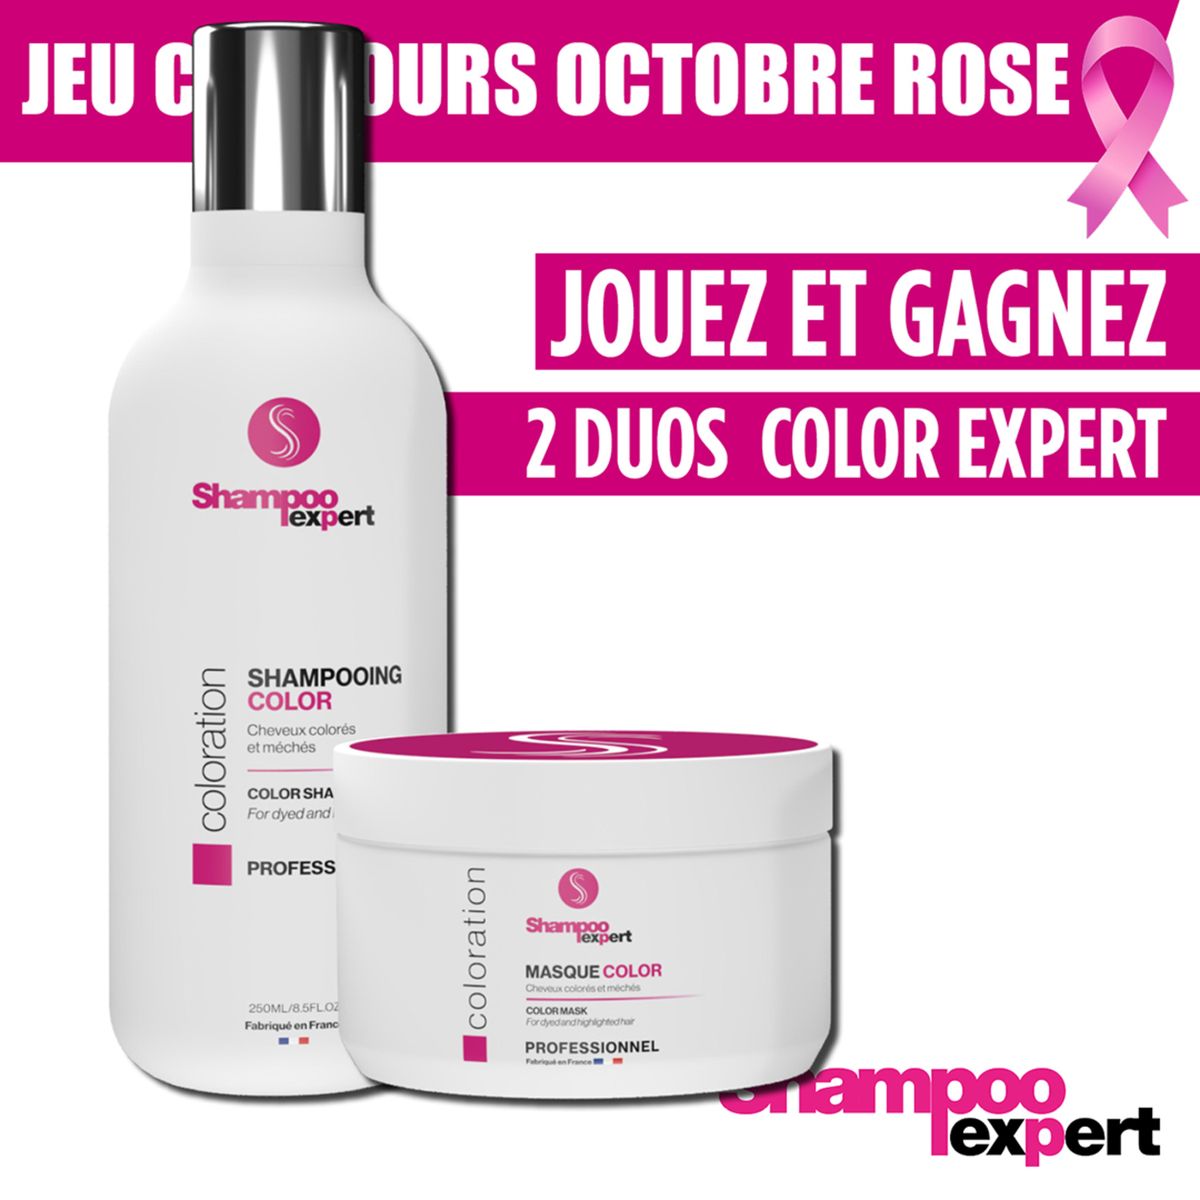 Catalogue Offre Shampoo, page 00002